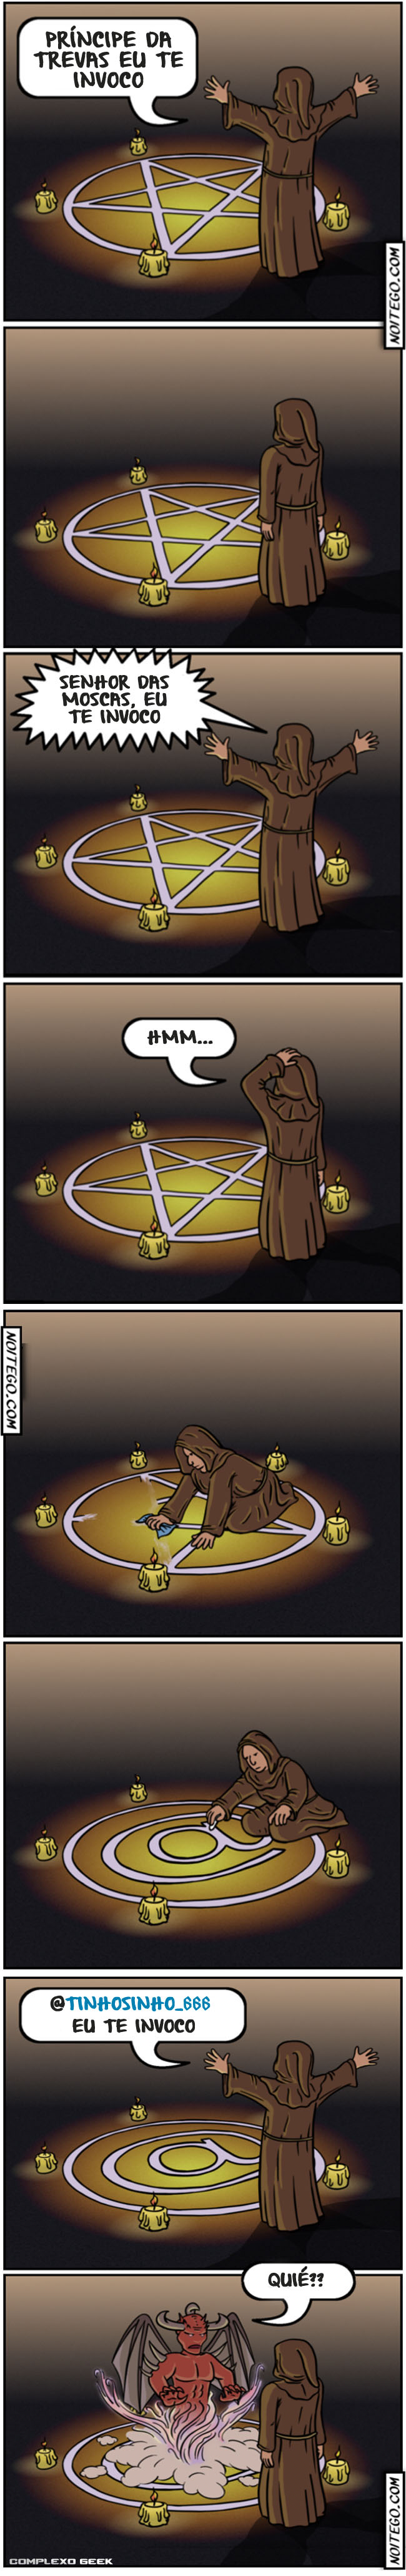 2 rituais satanicos